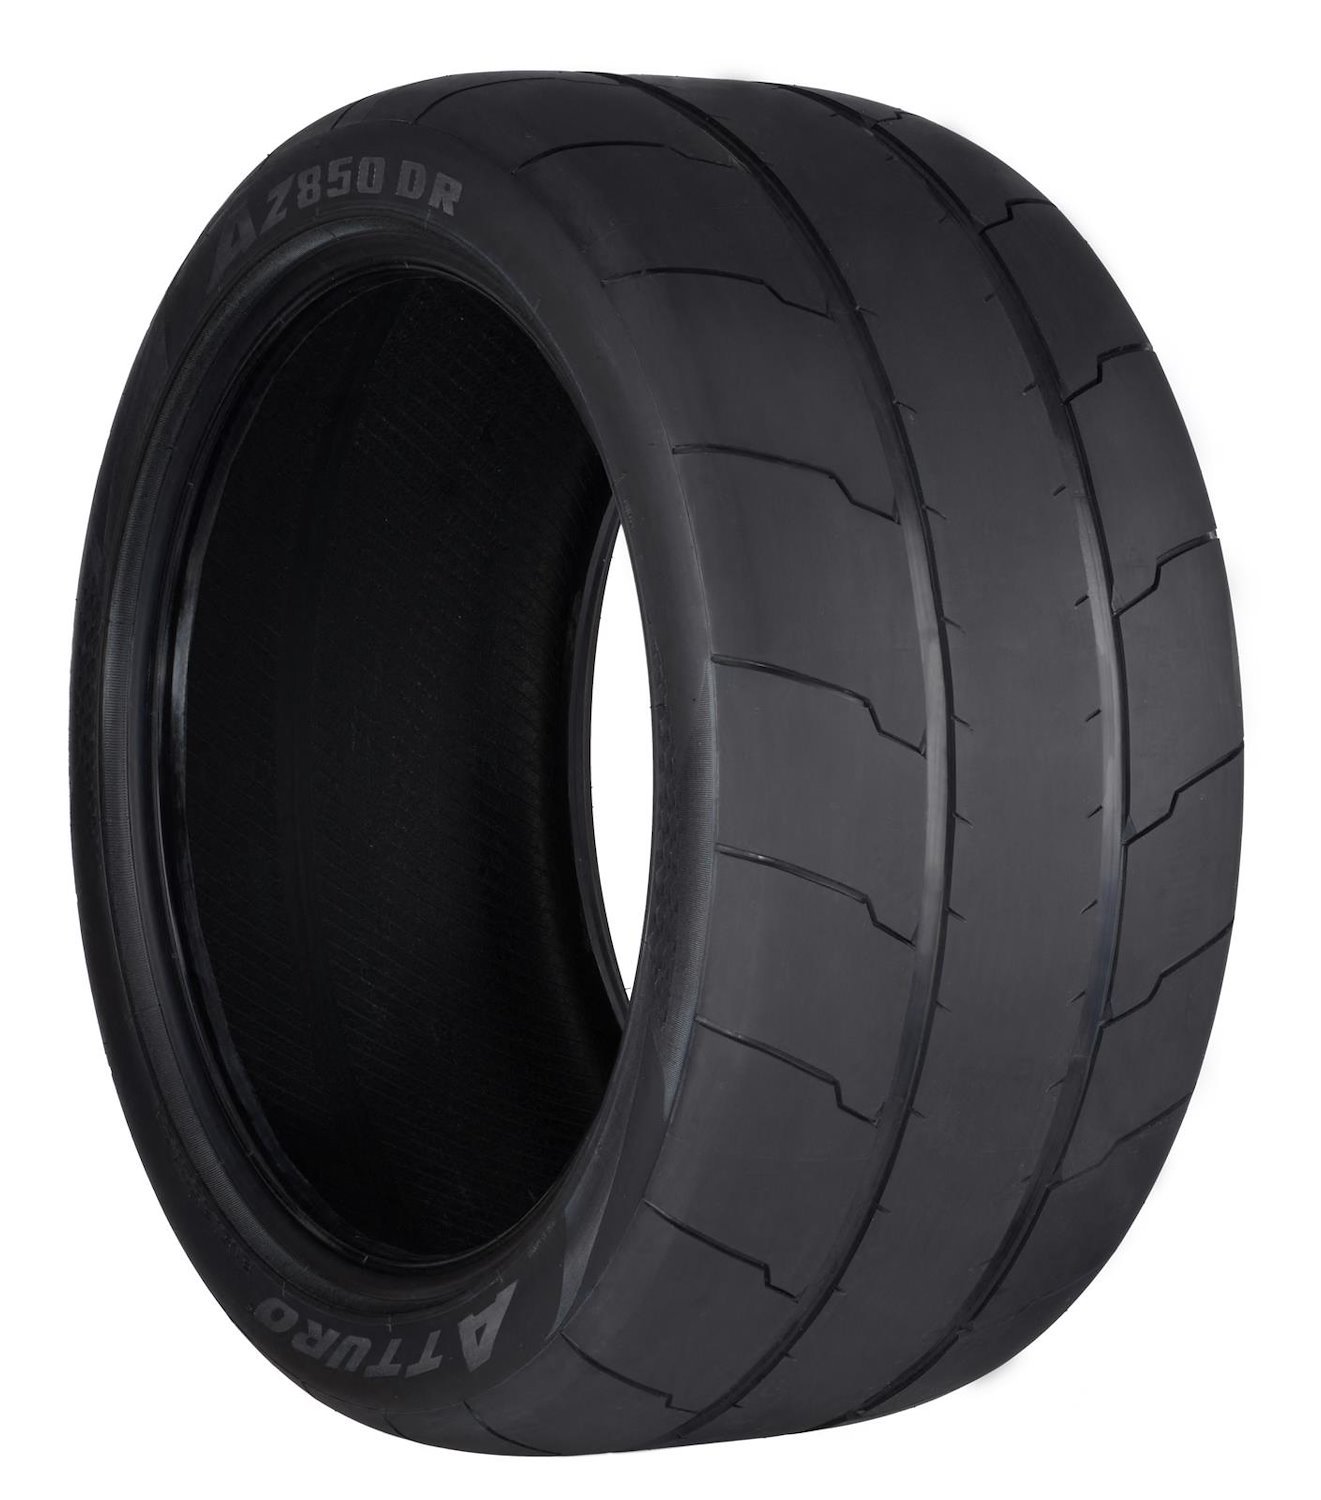 AZ 850 DR Drag Radial Tire, 315/35R20